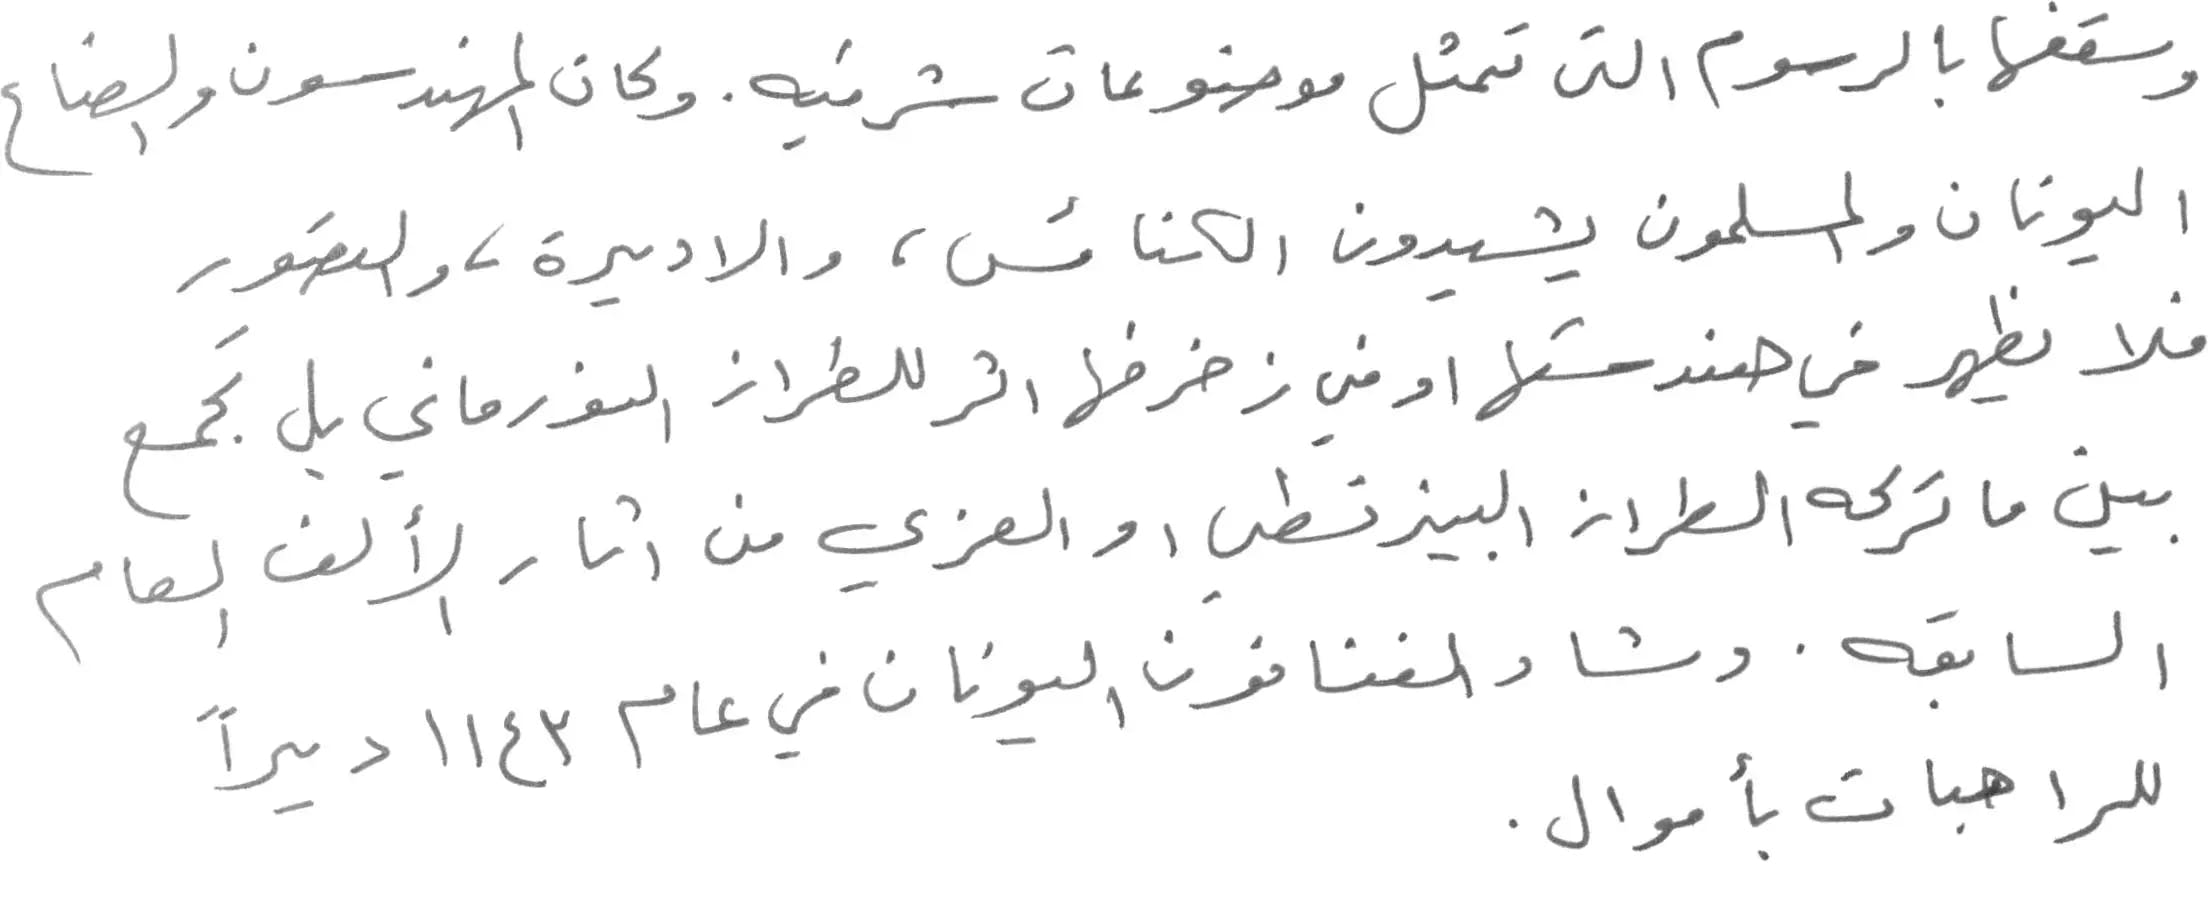 arabic-handwriting-08